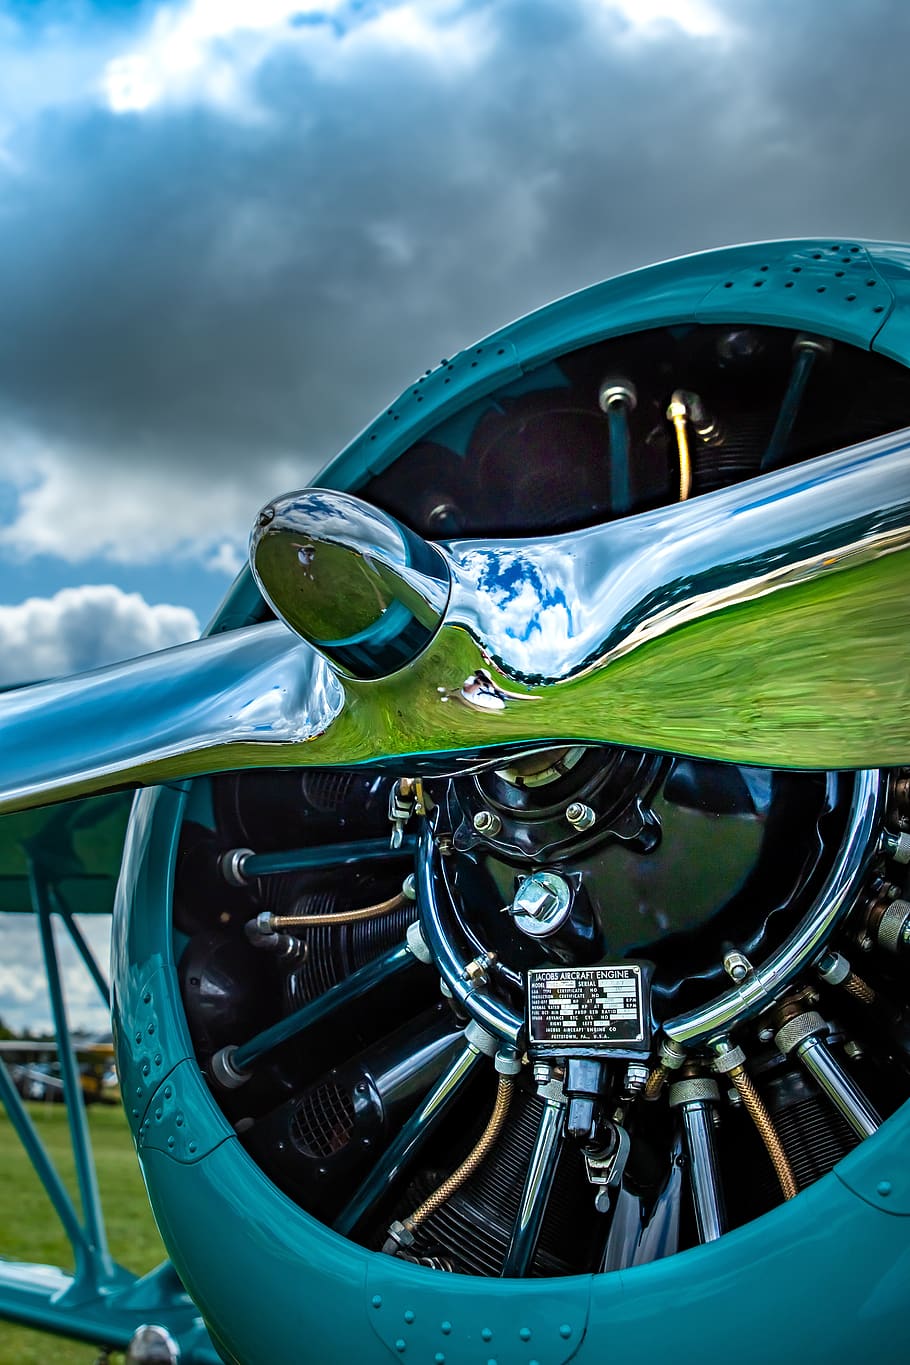 propeller, aircraft, engine, aviation, old, aeroplane, classic, vintage, mode of transportation, transportation